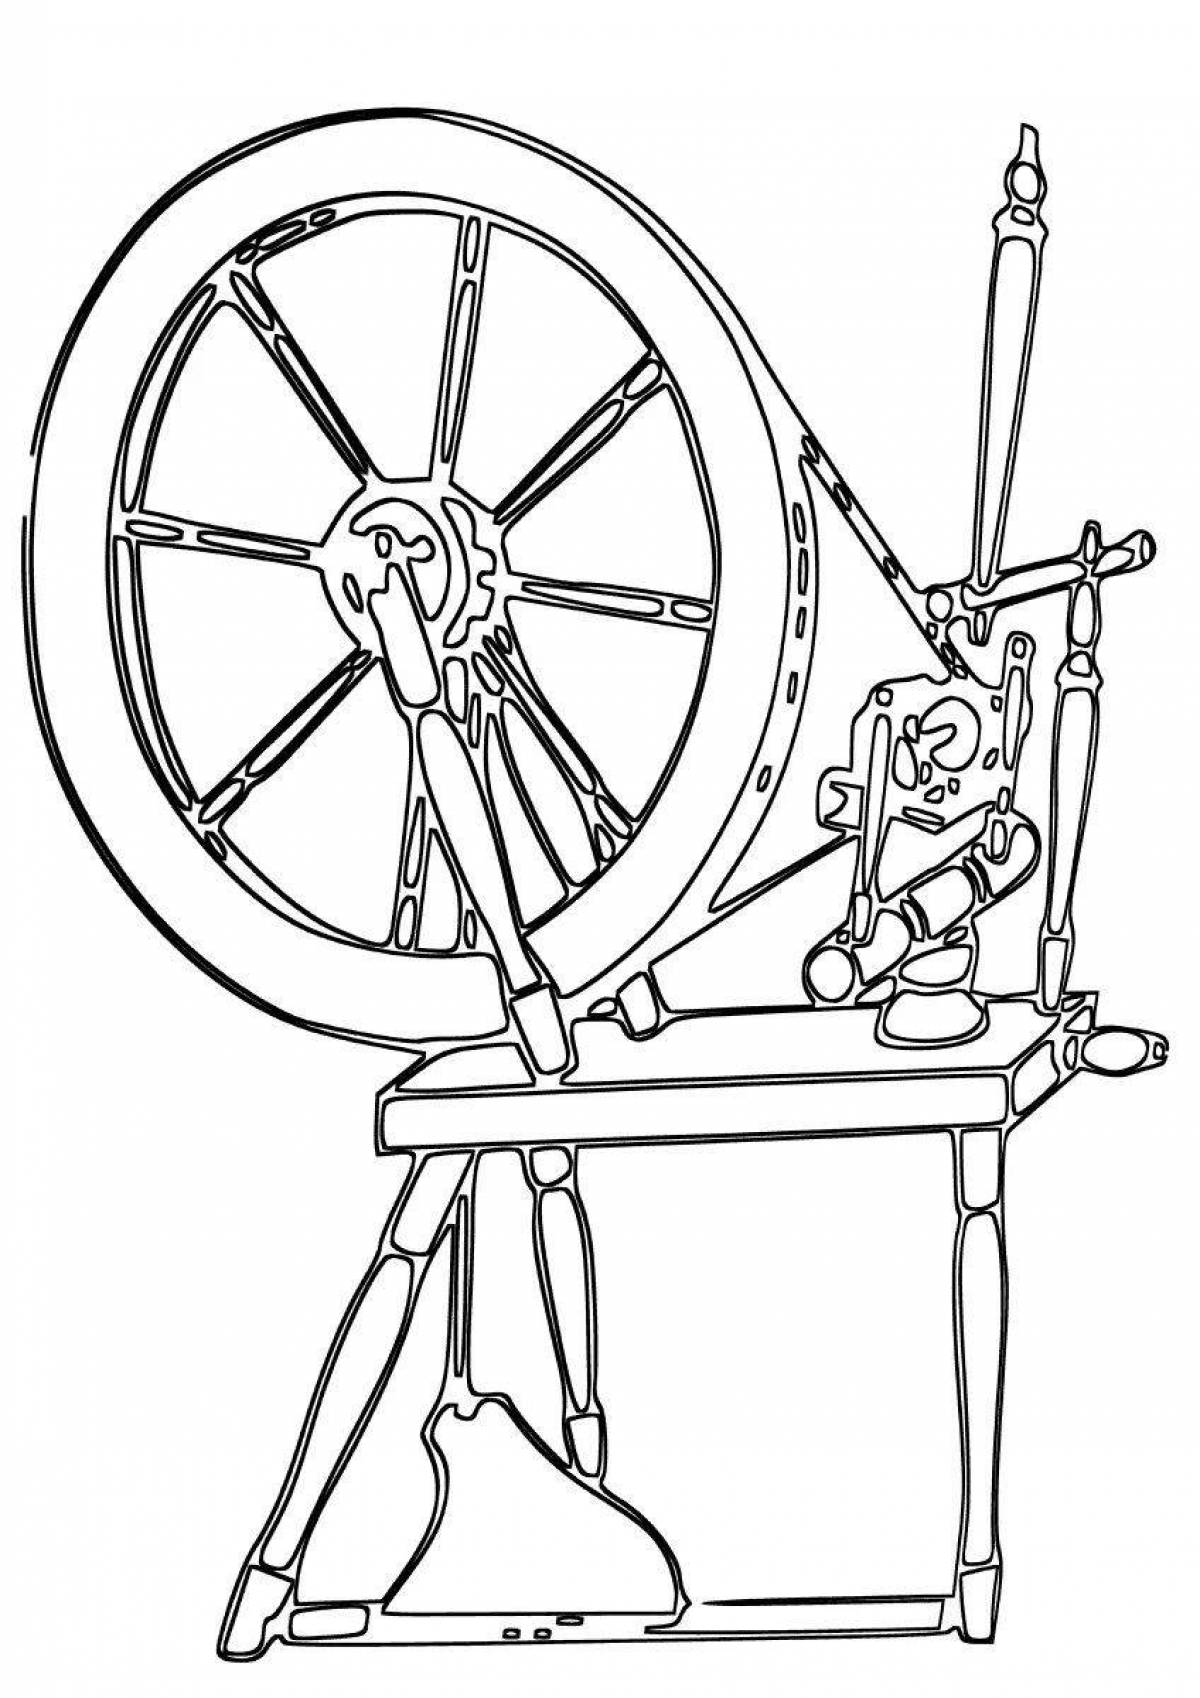 Spinning wheel #3